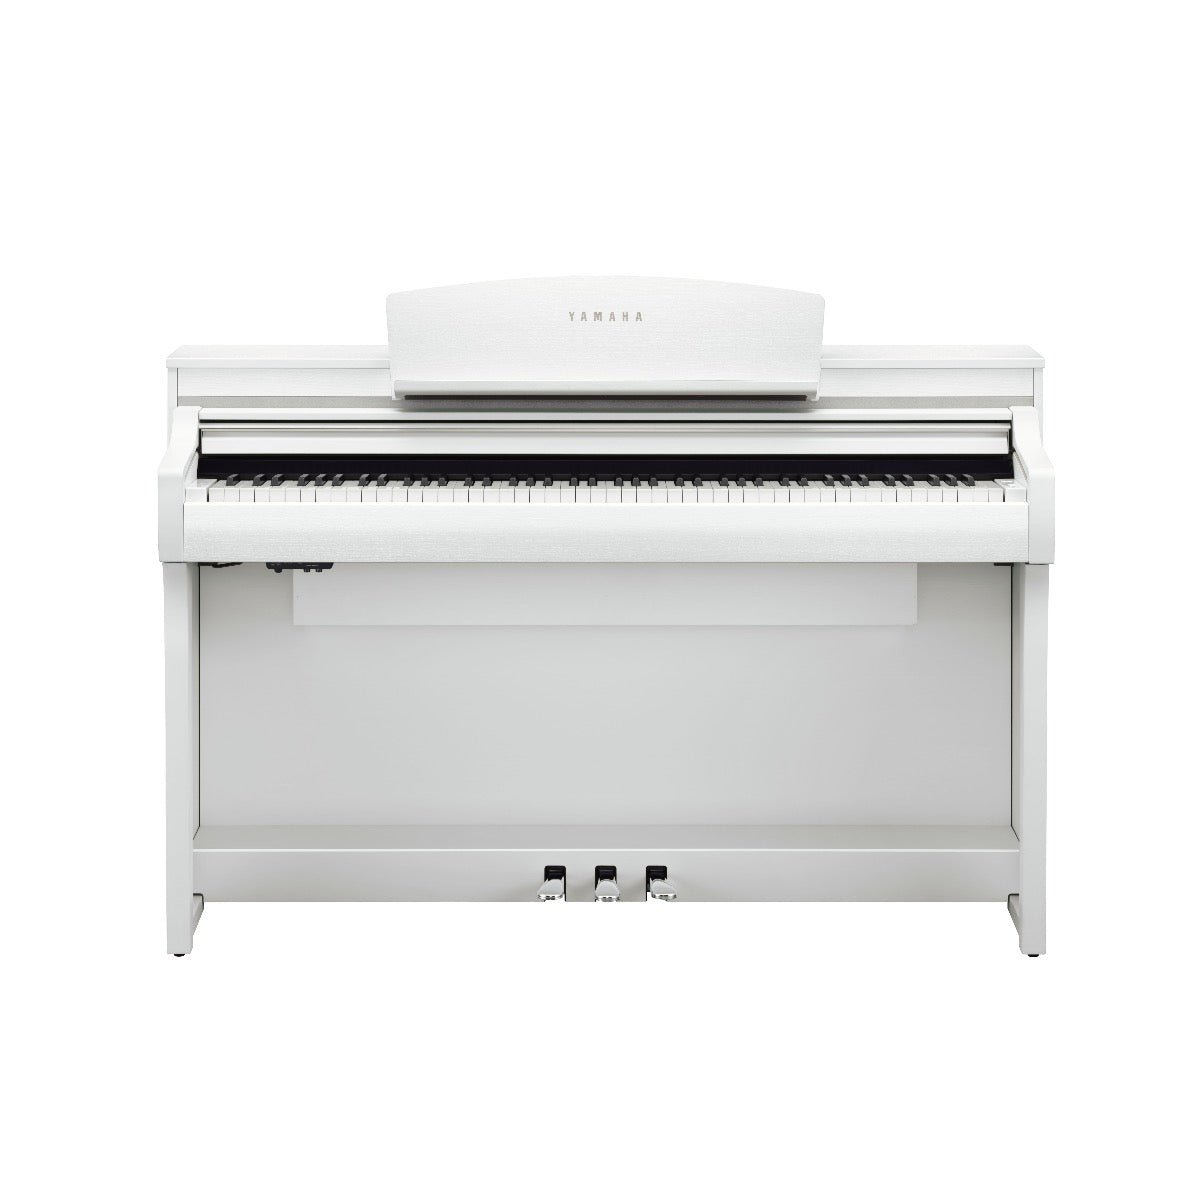 Yamaha Clavinova CSP275WH Digital Piano with Bench - White, View 2